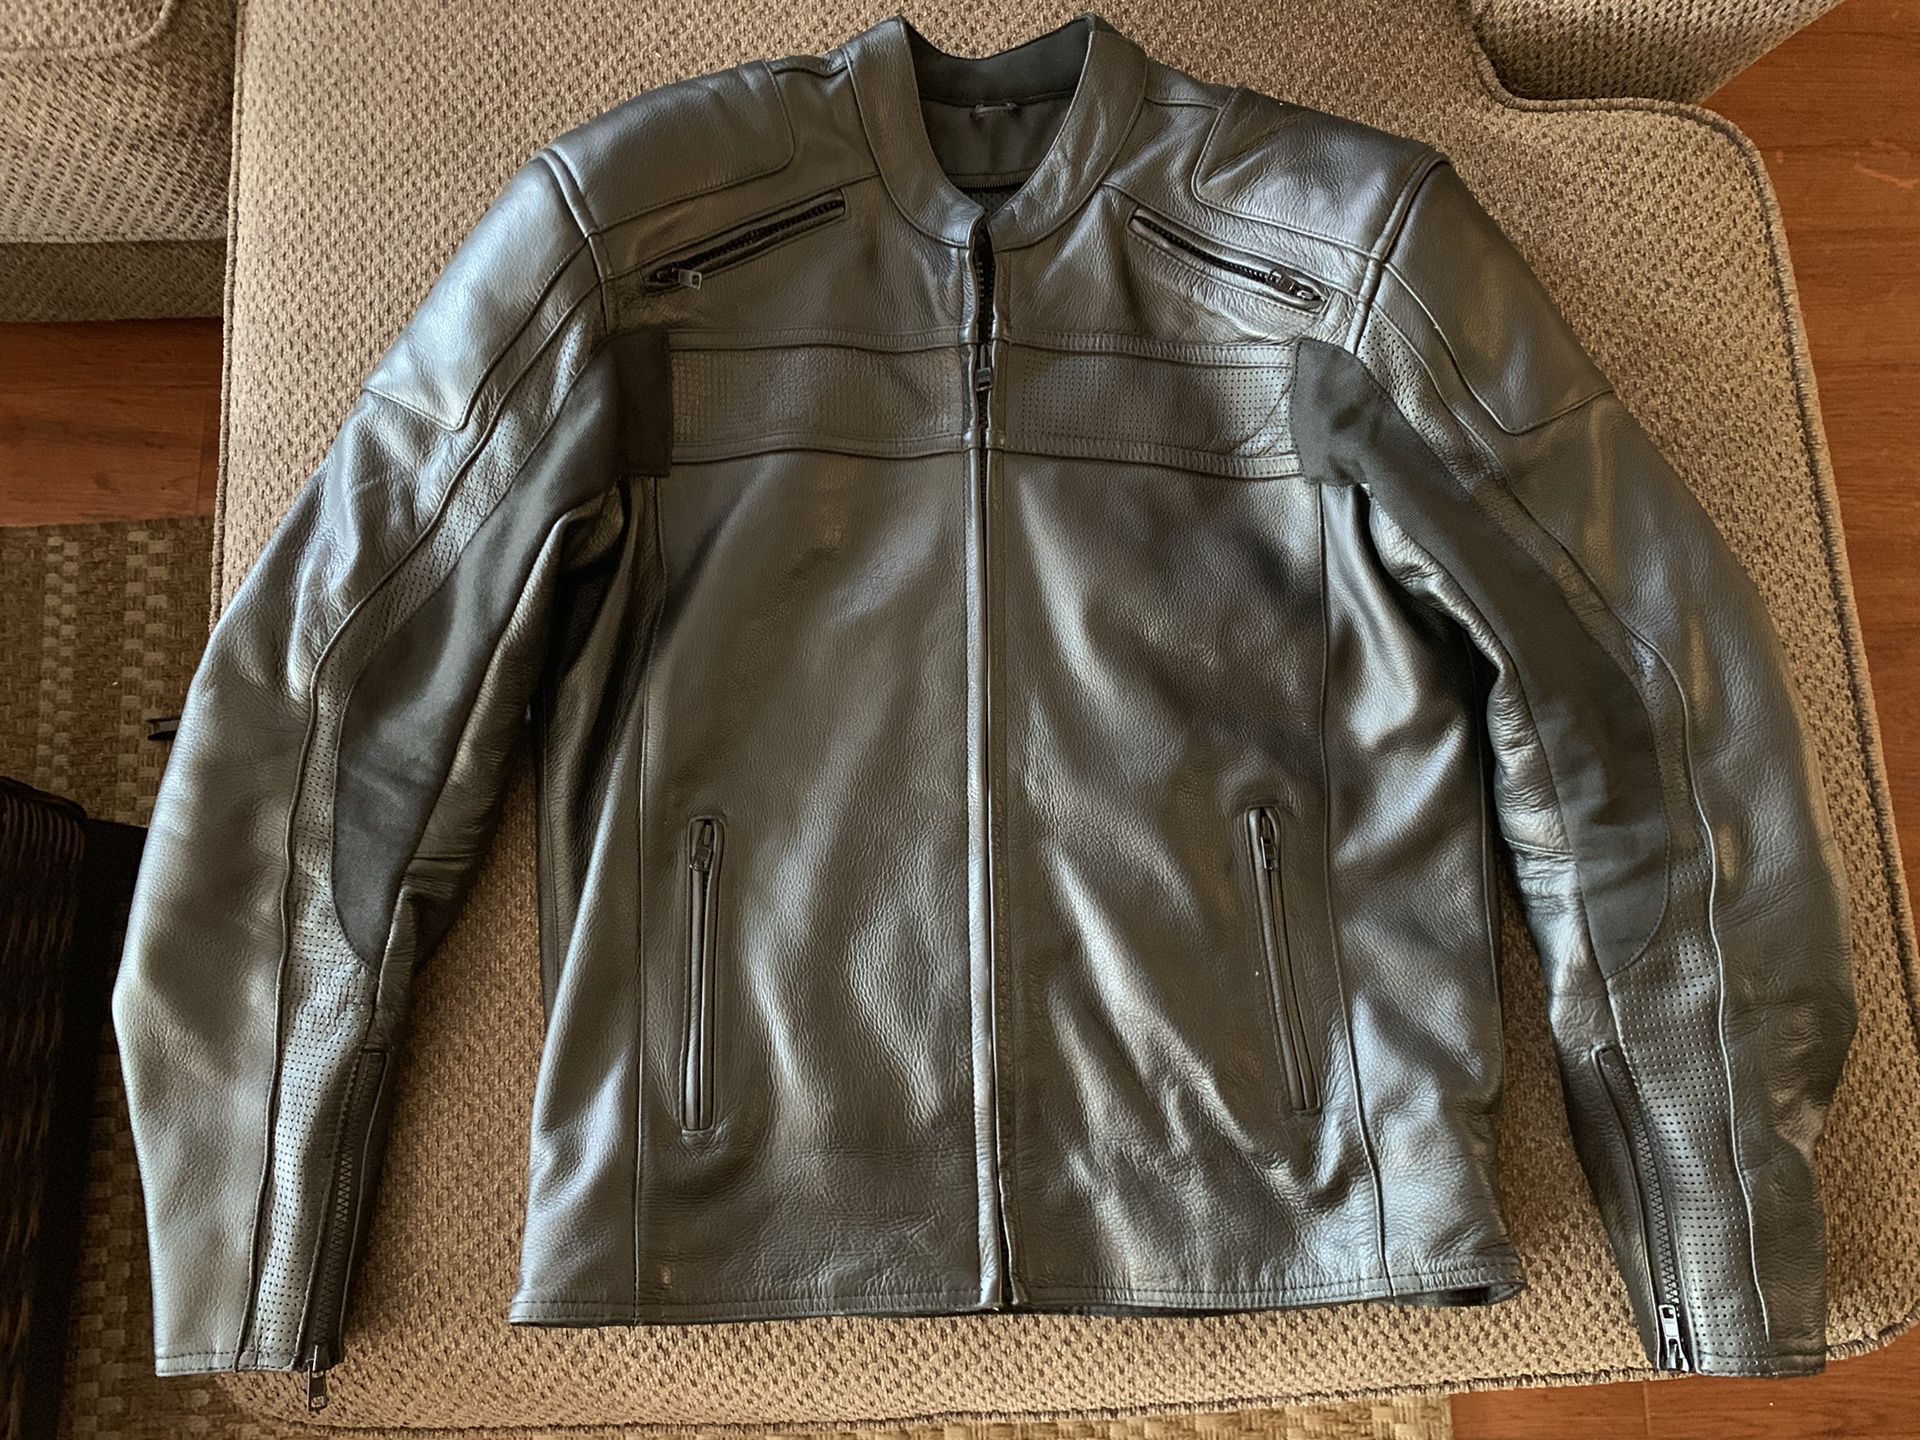 Bilt leather motorcycle jacket